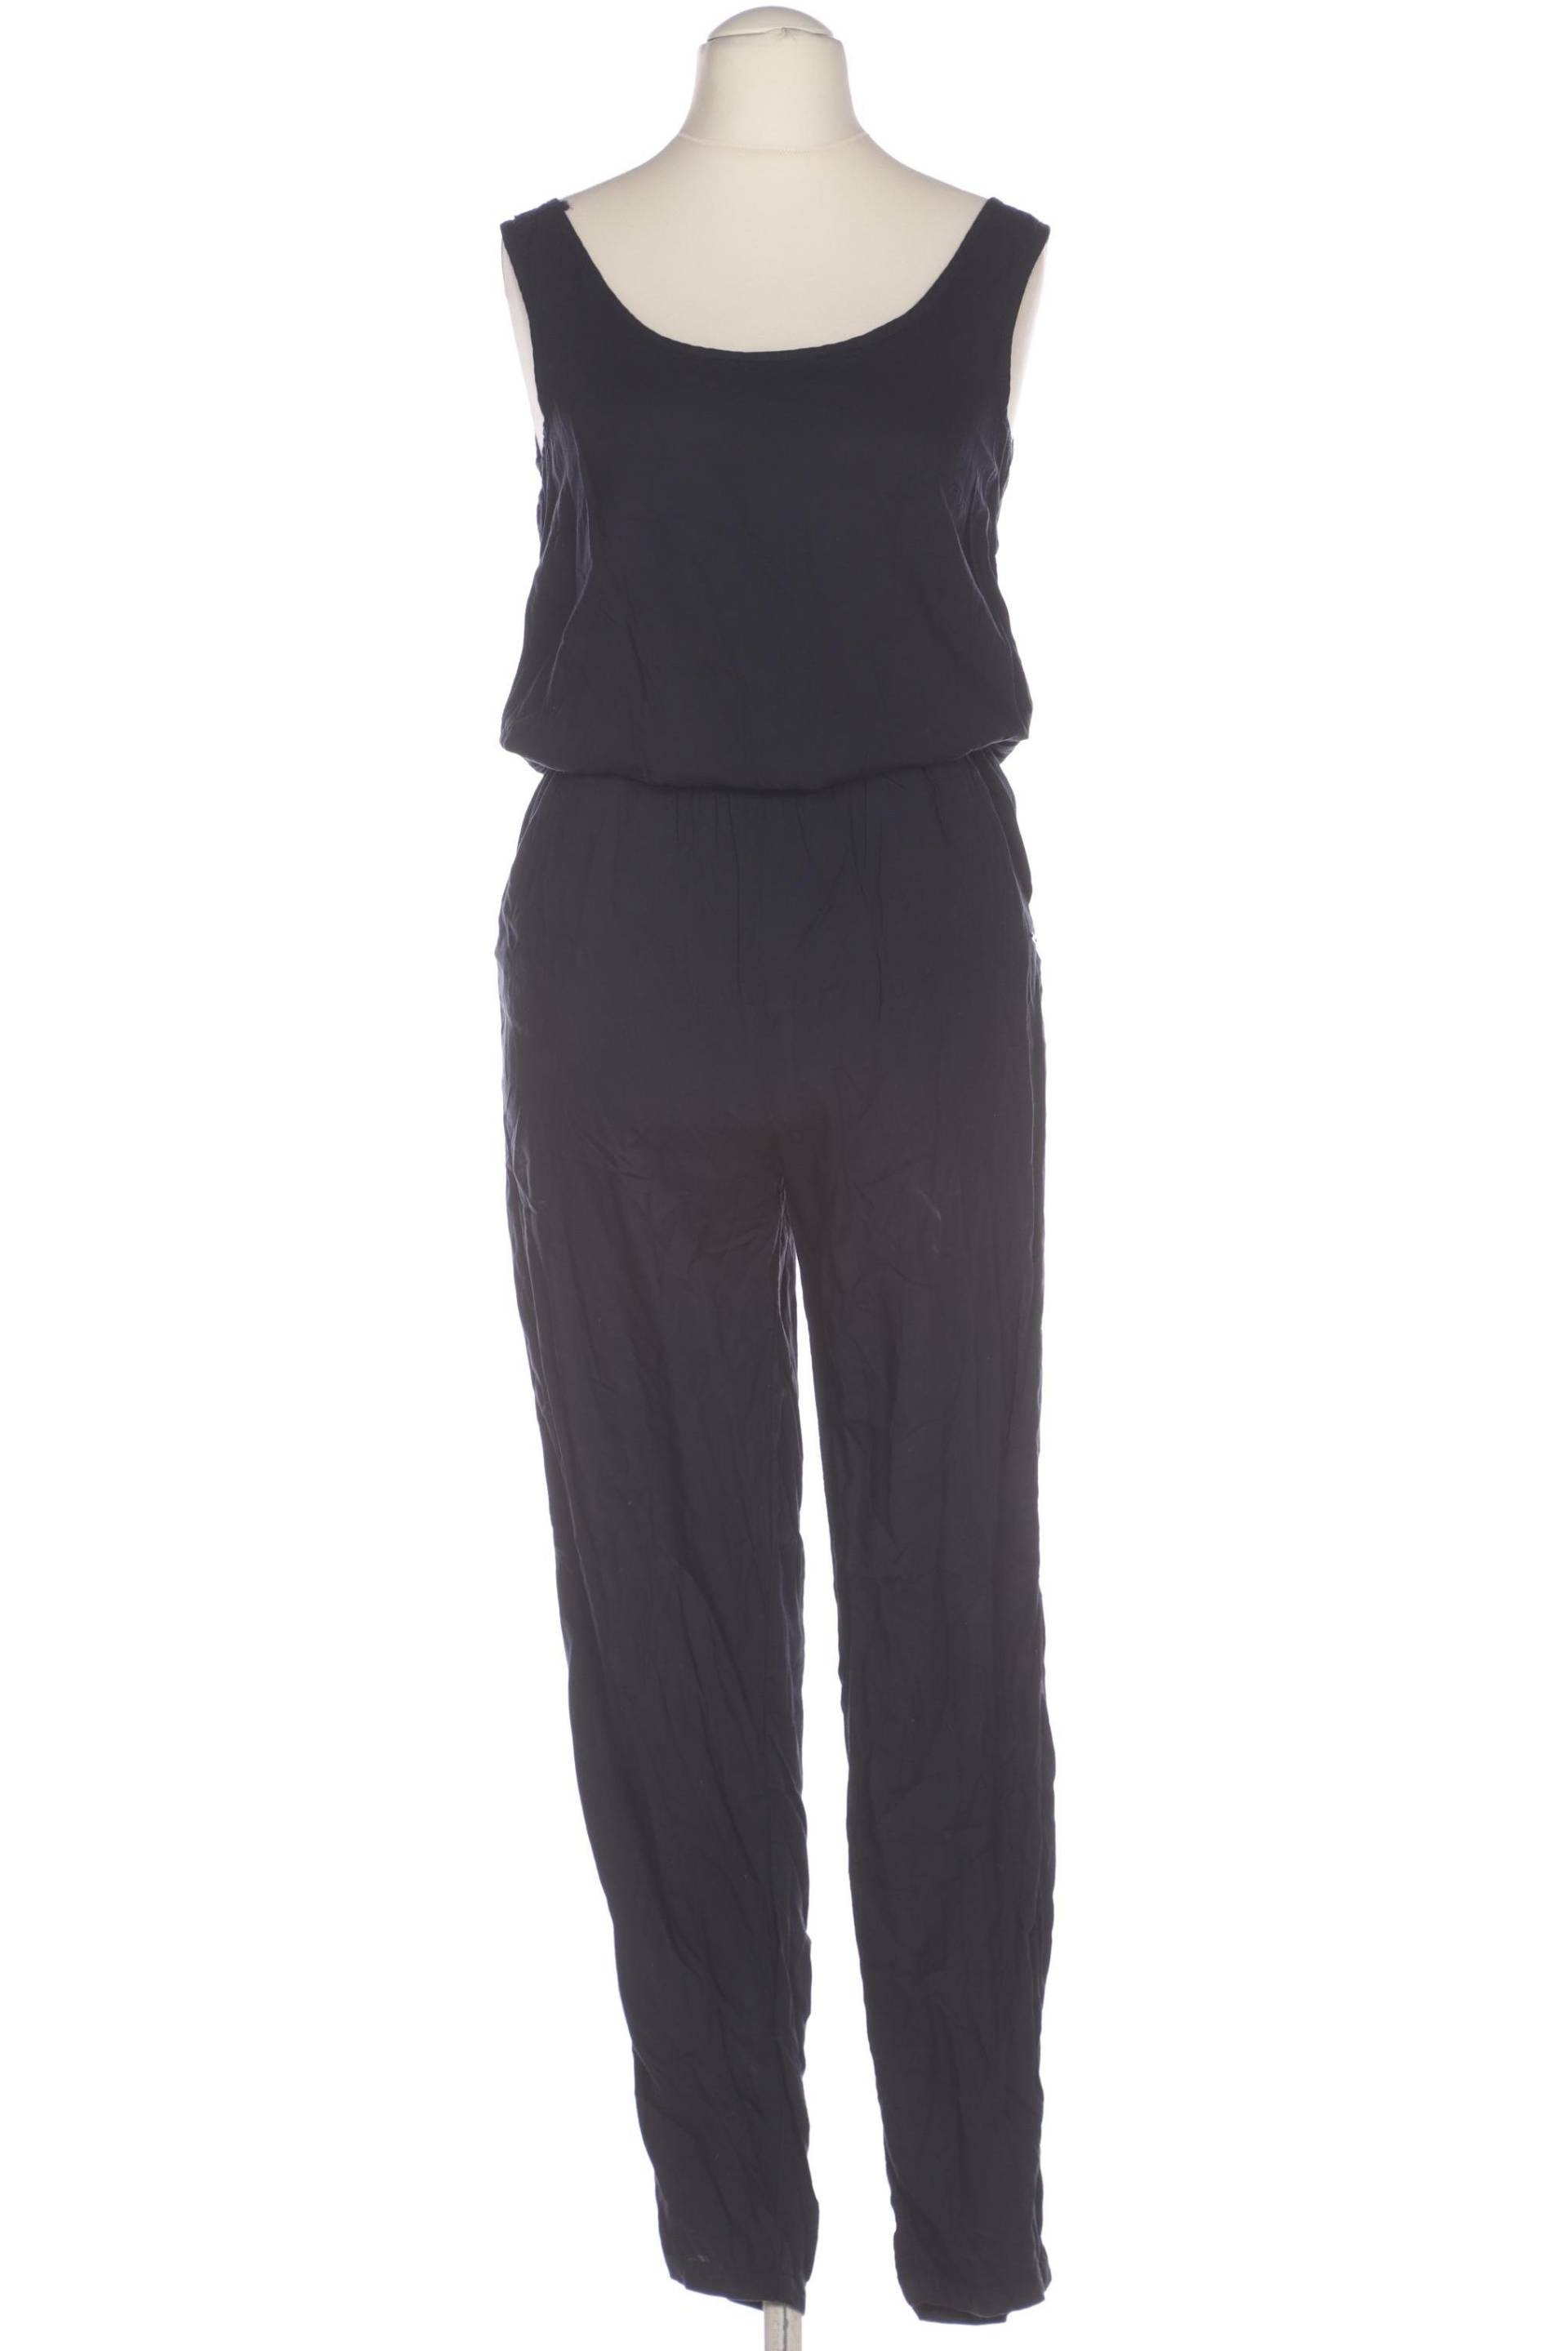 Tom Tailor Damen Jumpsuit/Overall, marineblau, Gr. 36 von Tom Tailor